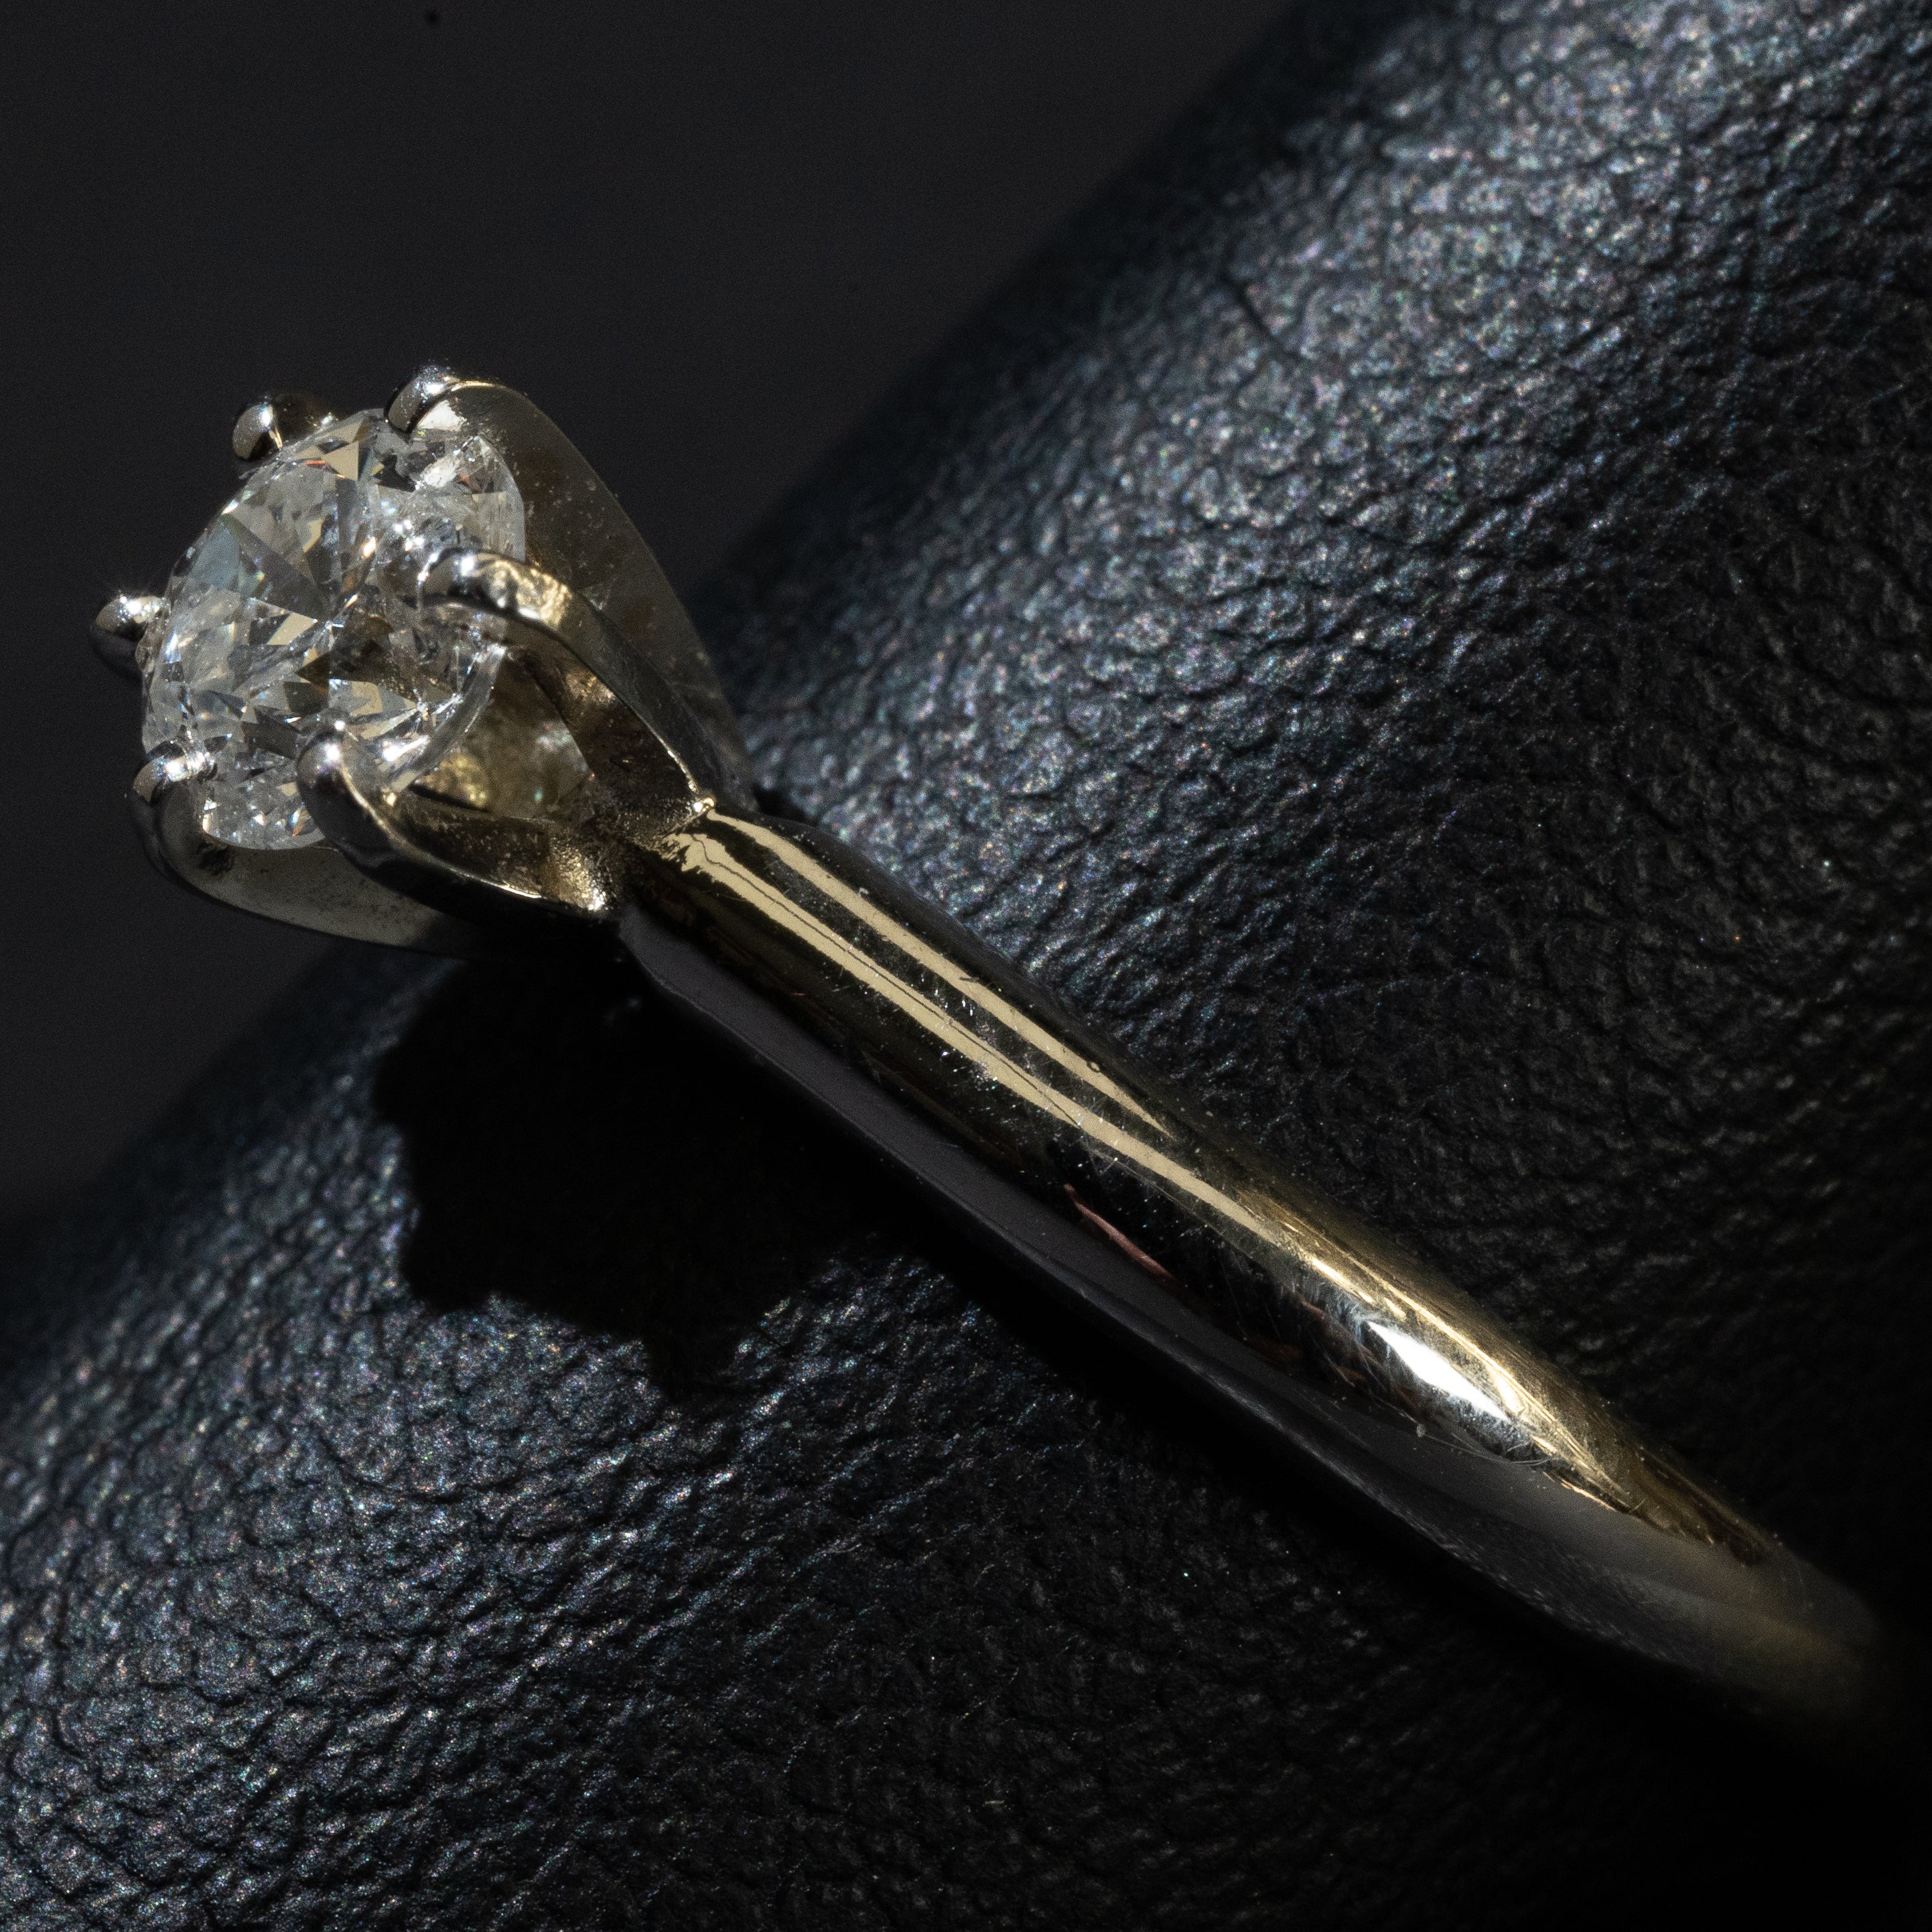 Ladies Round Cut Diamond Ring / 14 Kt W - Anderson Jewelers 